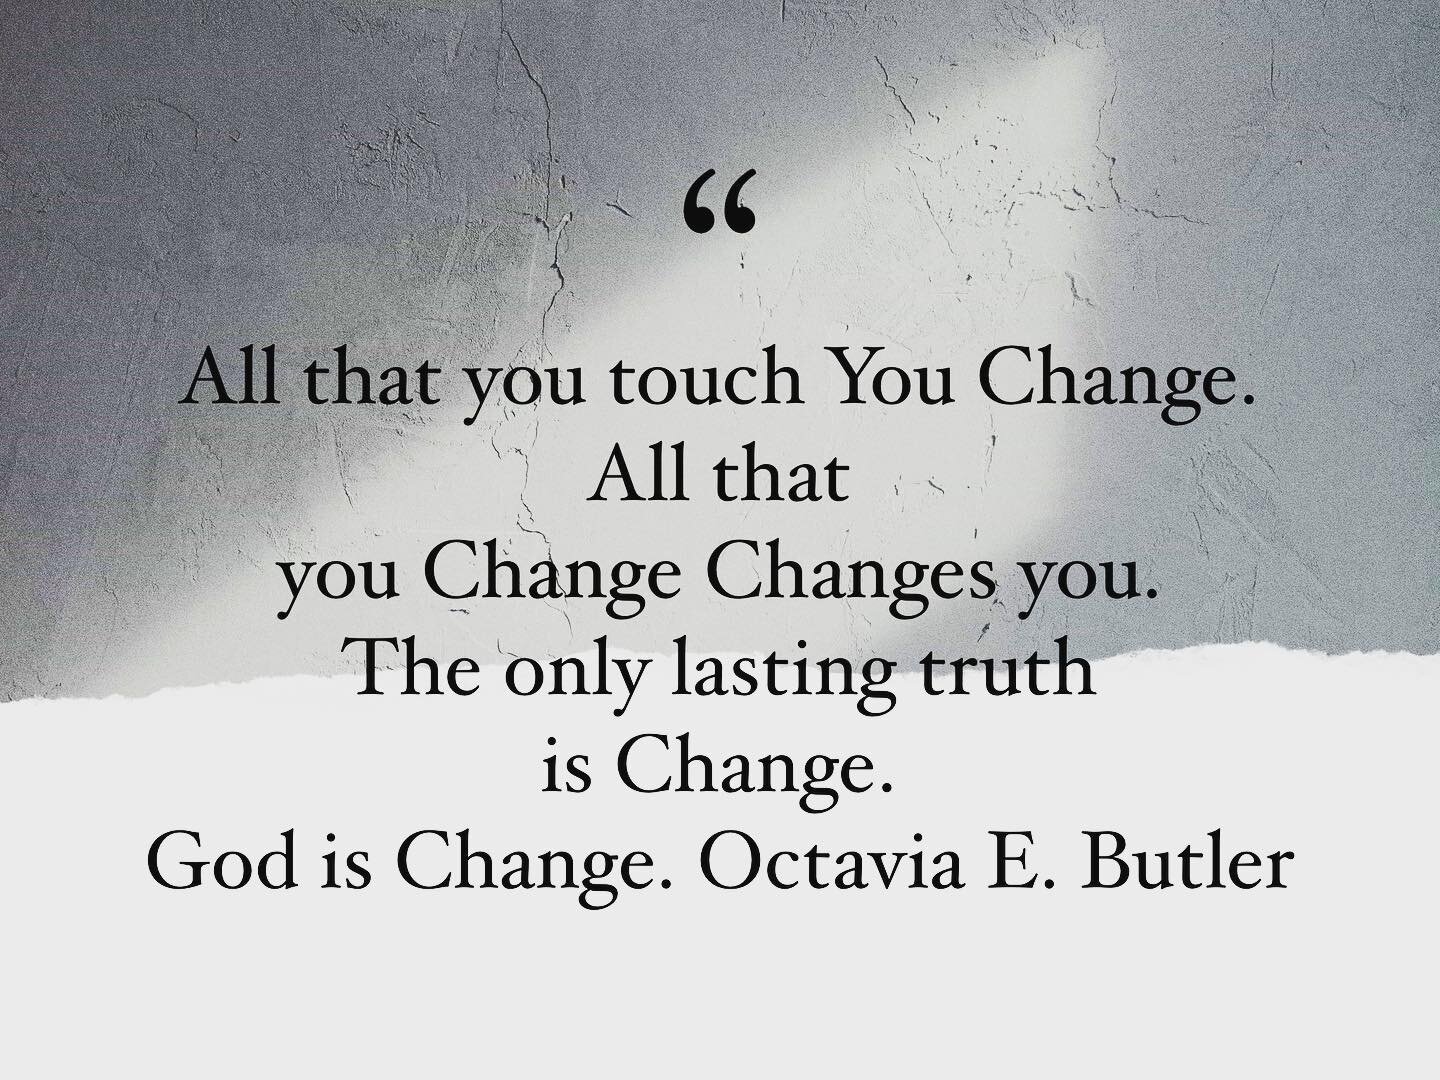 Octavia Butler